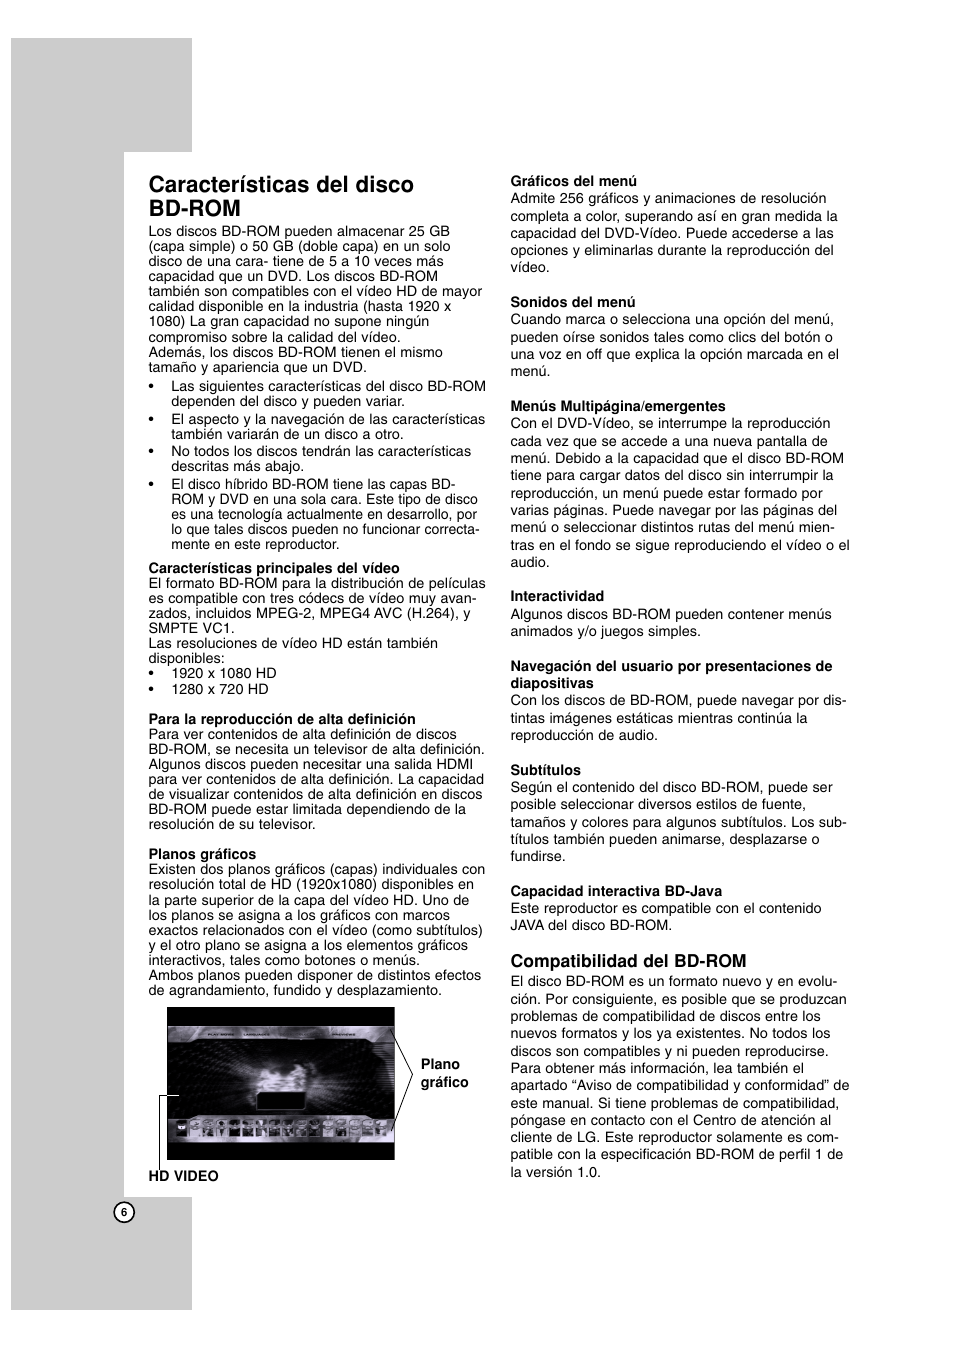 Características del disco bd-rom | LG BH100 Manual del usuario | Página 6 / 30